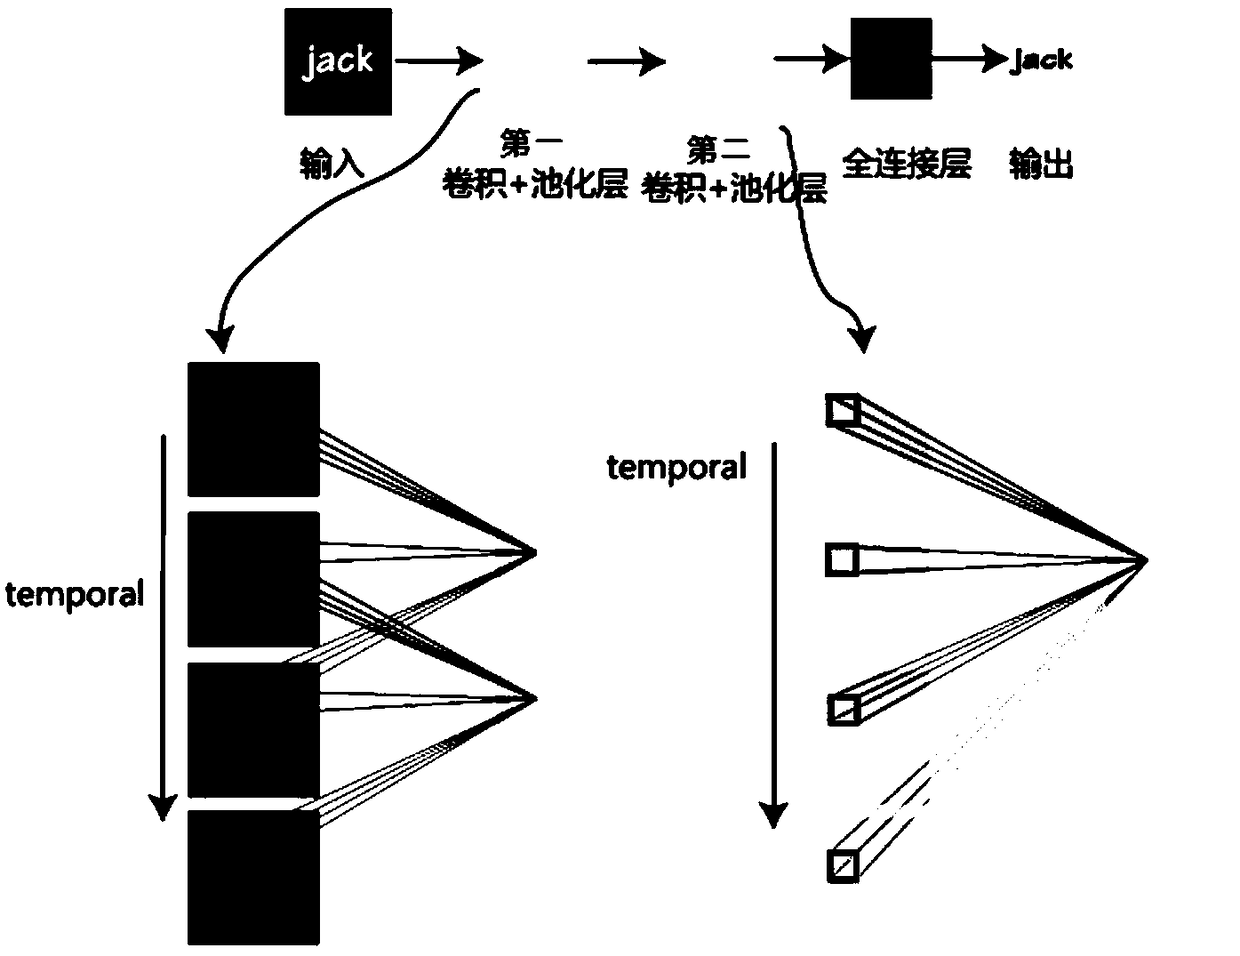 A three-dimensional convolution neural network implementation method based on memristor